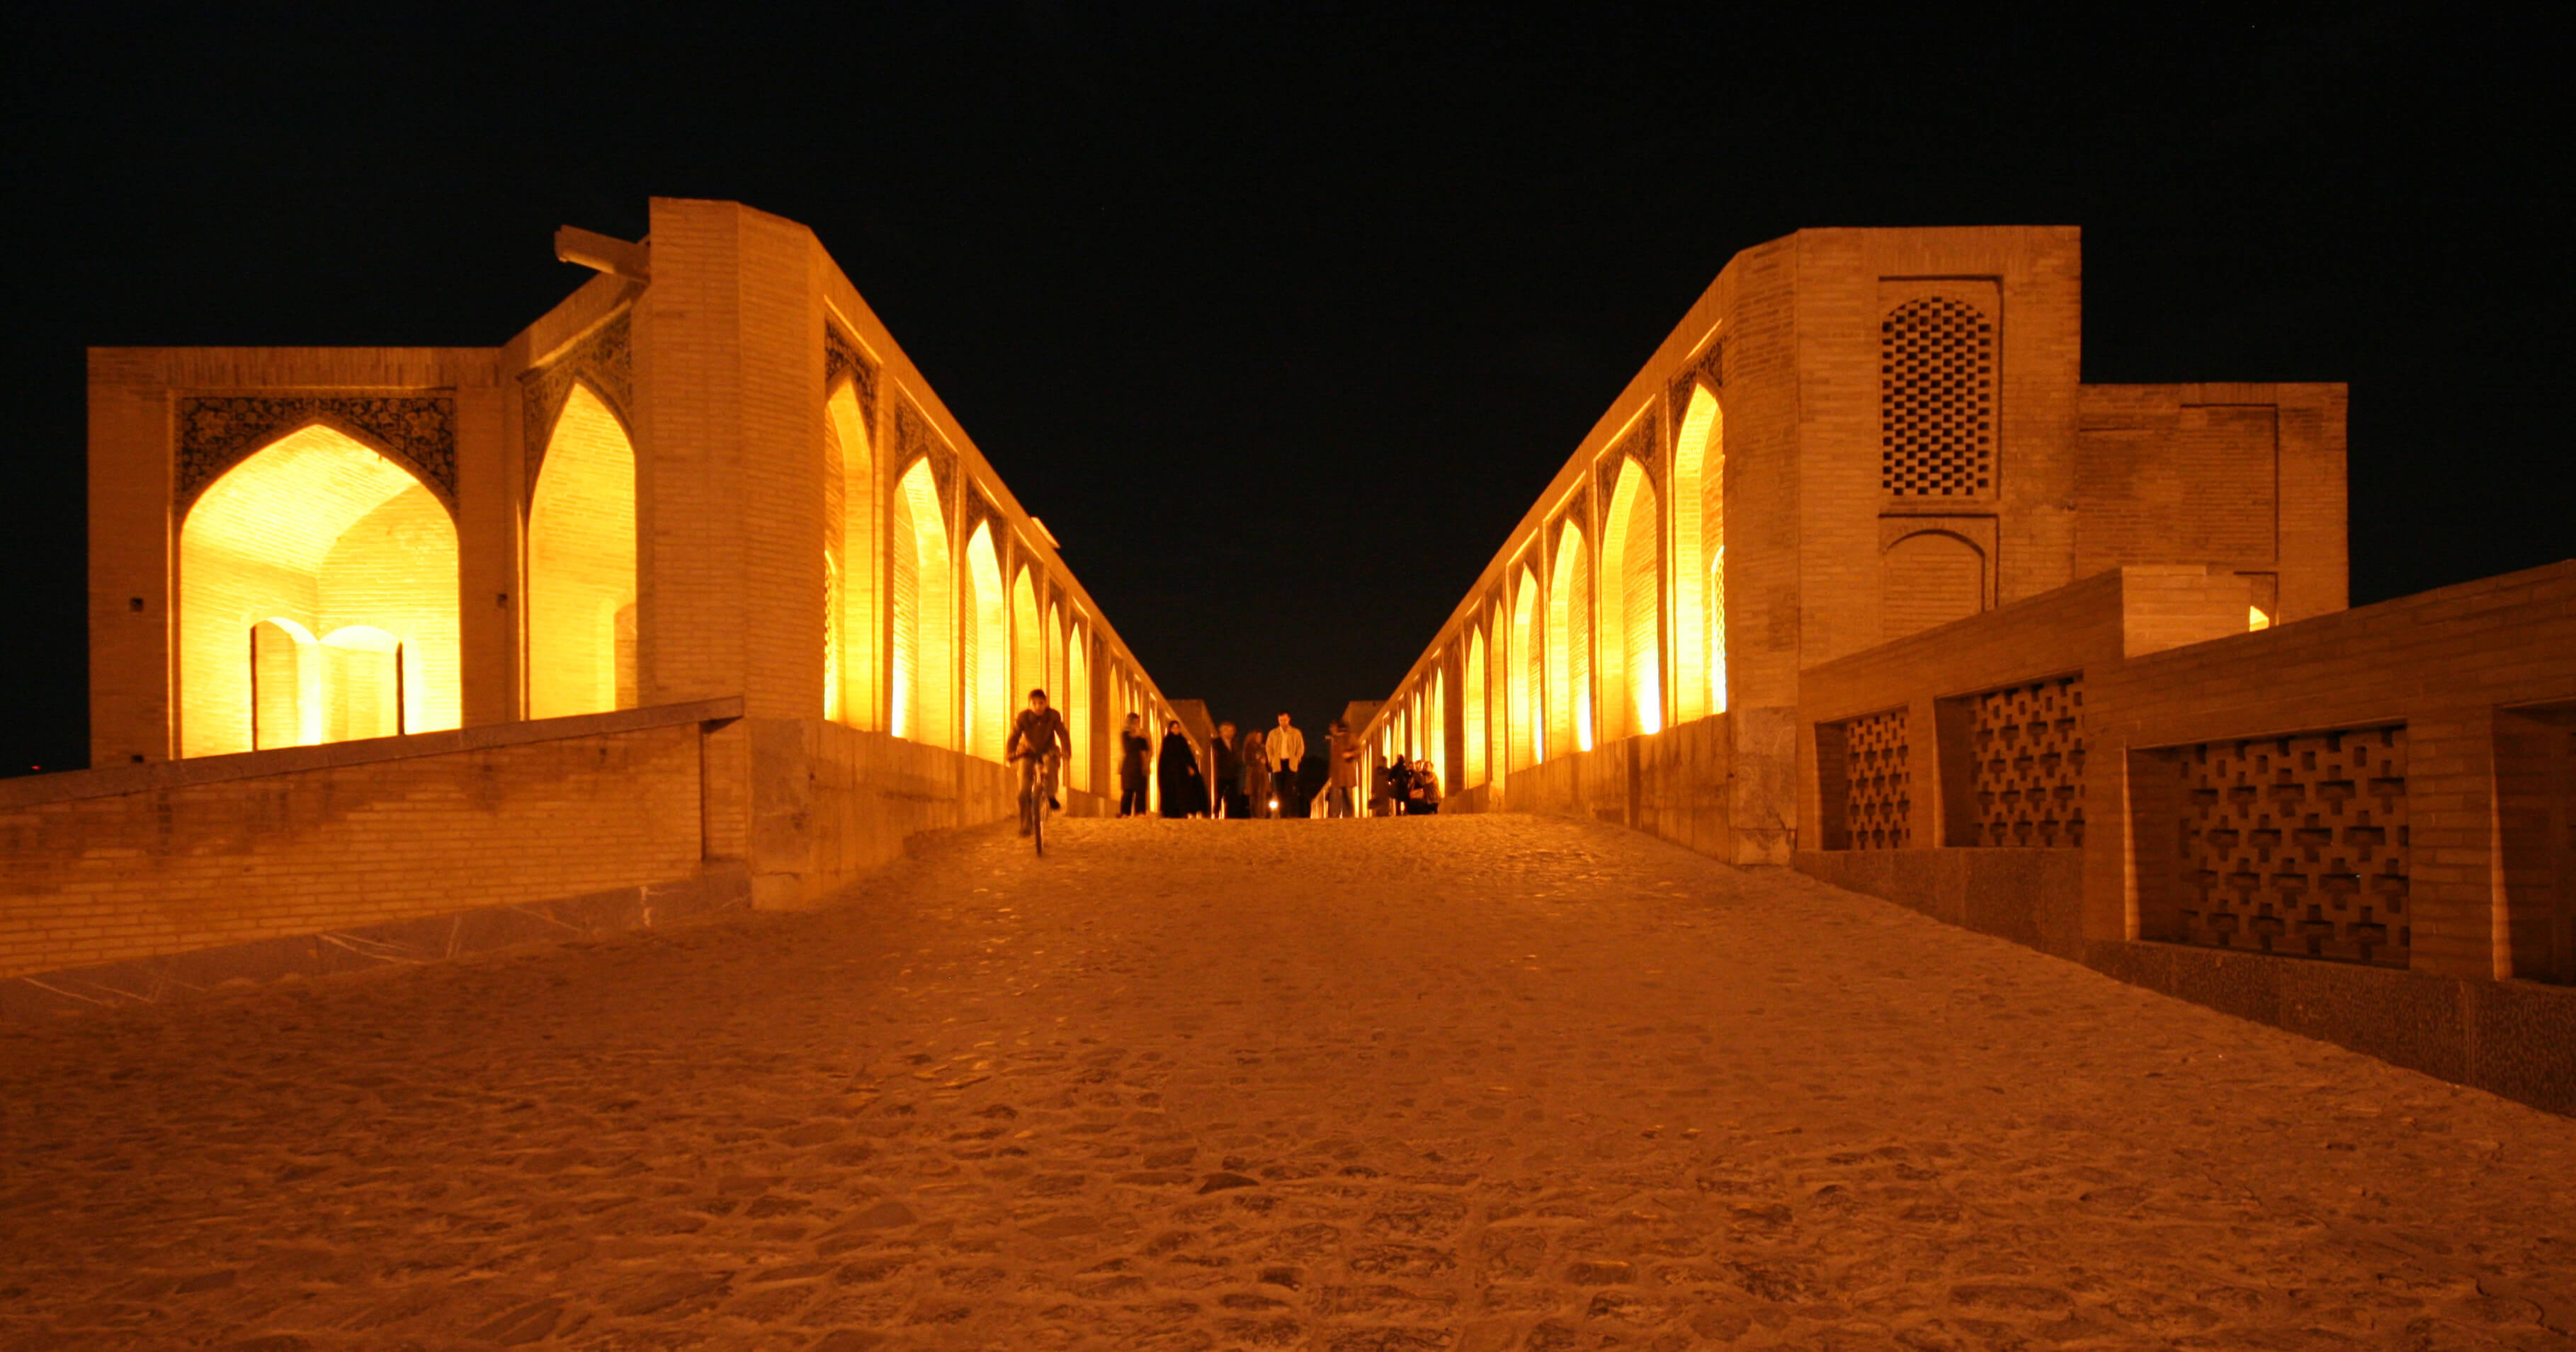 The Allahverdi Khan Bridge in Isfahan, Iran. Source: Bastian / Flickr